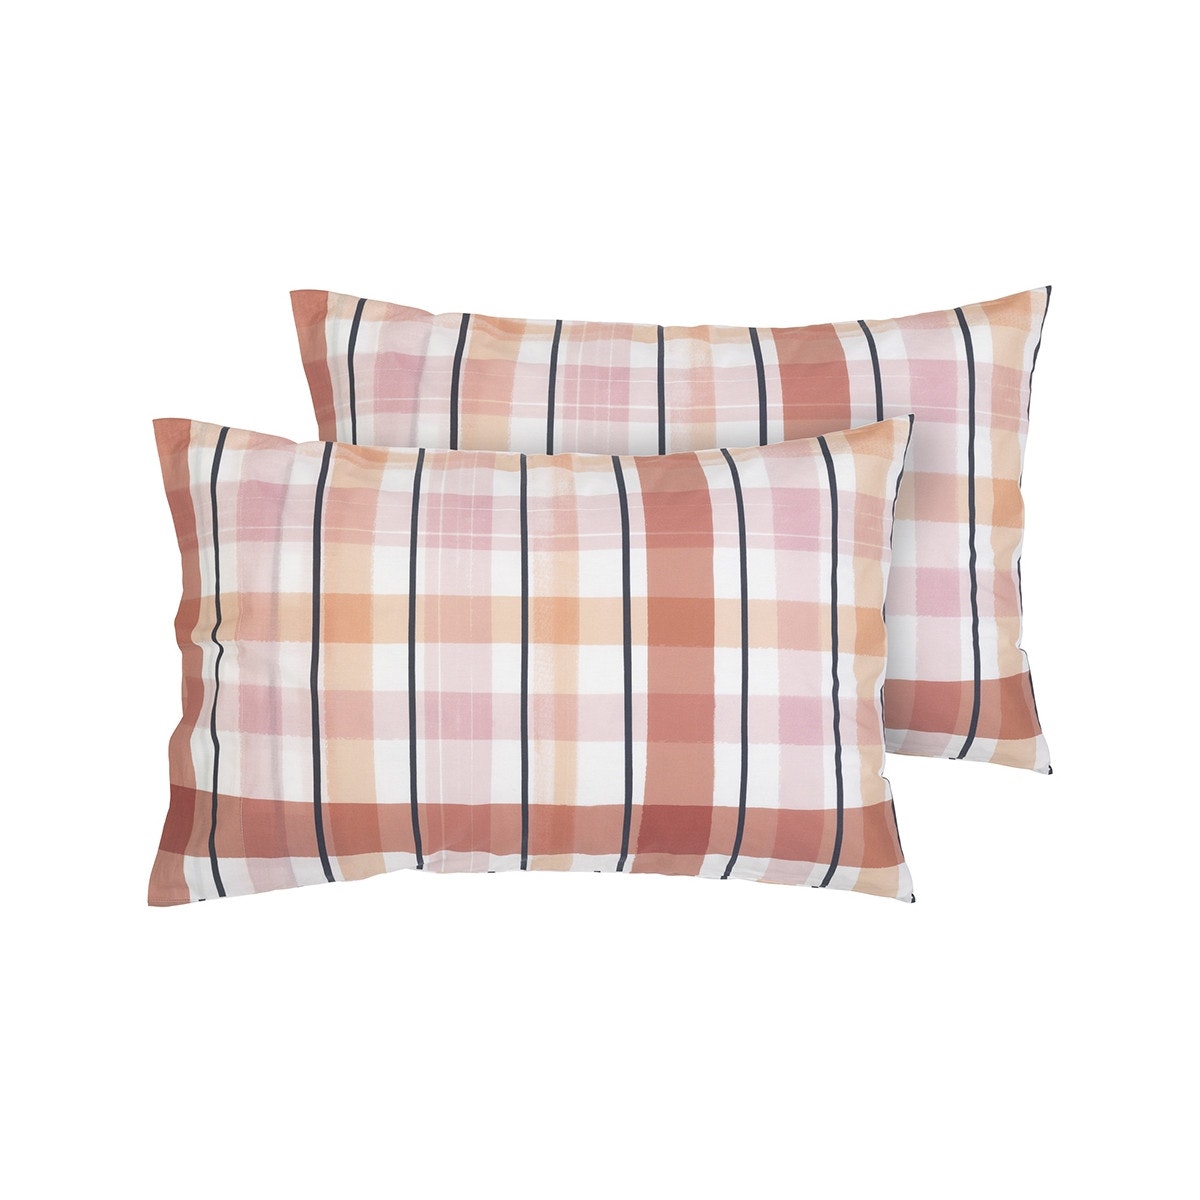 Ecology Dream Standard Pillowcase Pair- Isla Check